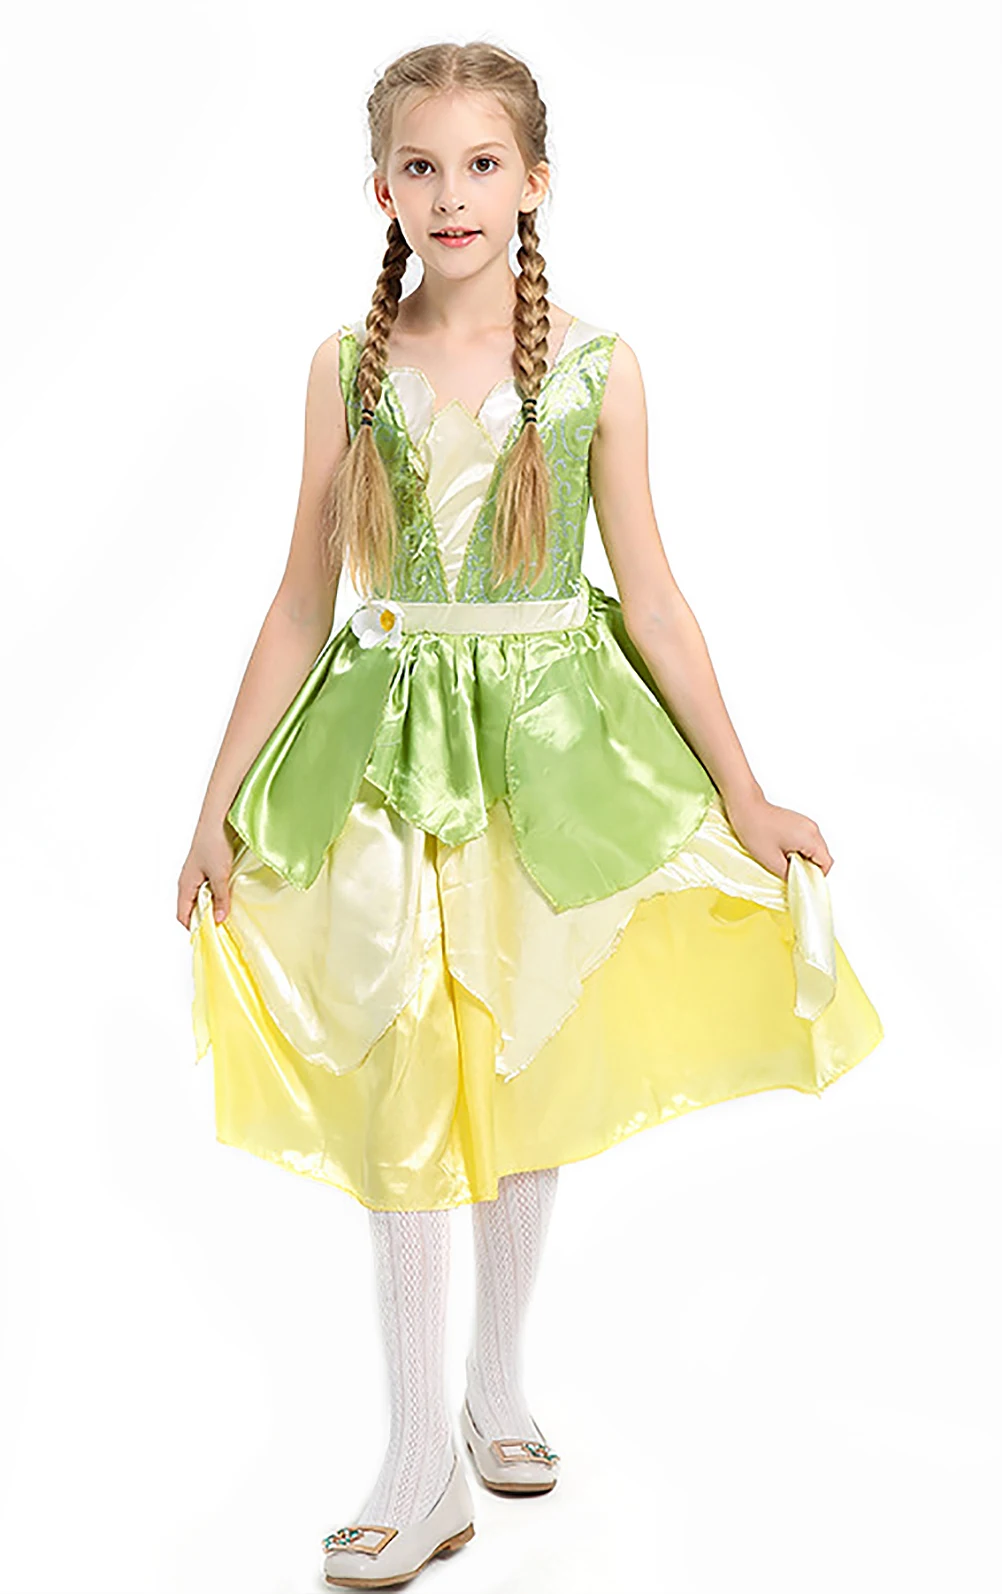 Jurebecia Green Fairy Frog Princess Dress Girls Birthday Party Fancy Dresses Kids Halloween Elf Costume Outfits